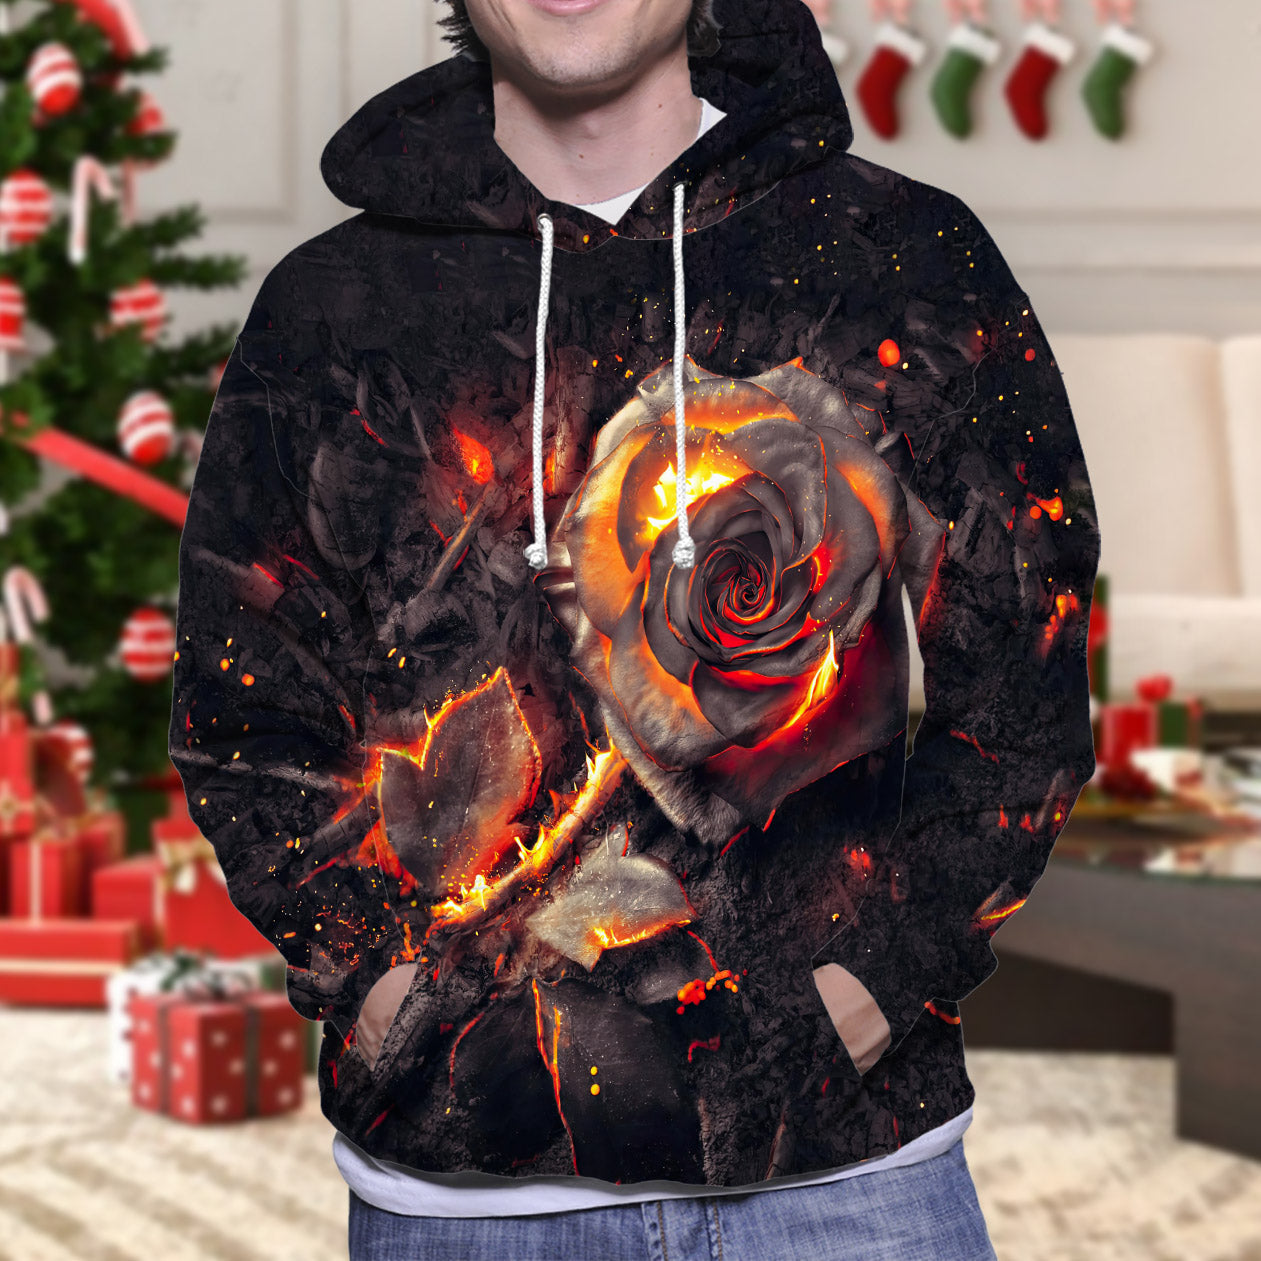 Burned Rose - Christian Hoodie 3d - God 3d Sweatershirt - Christian Shirt